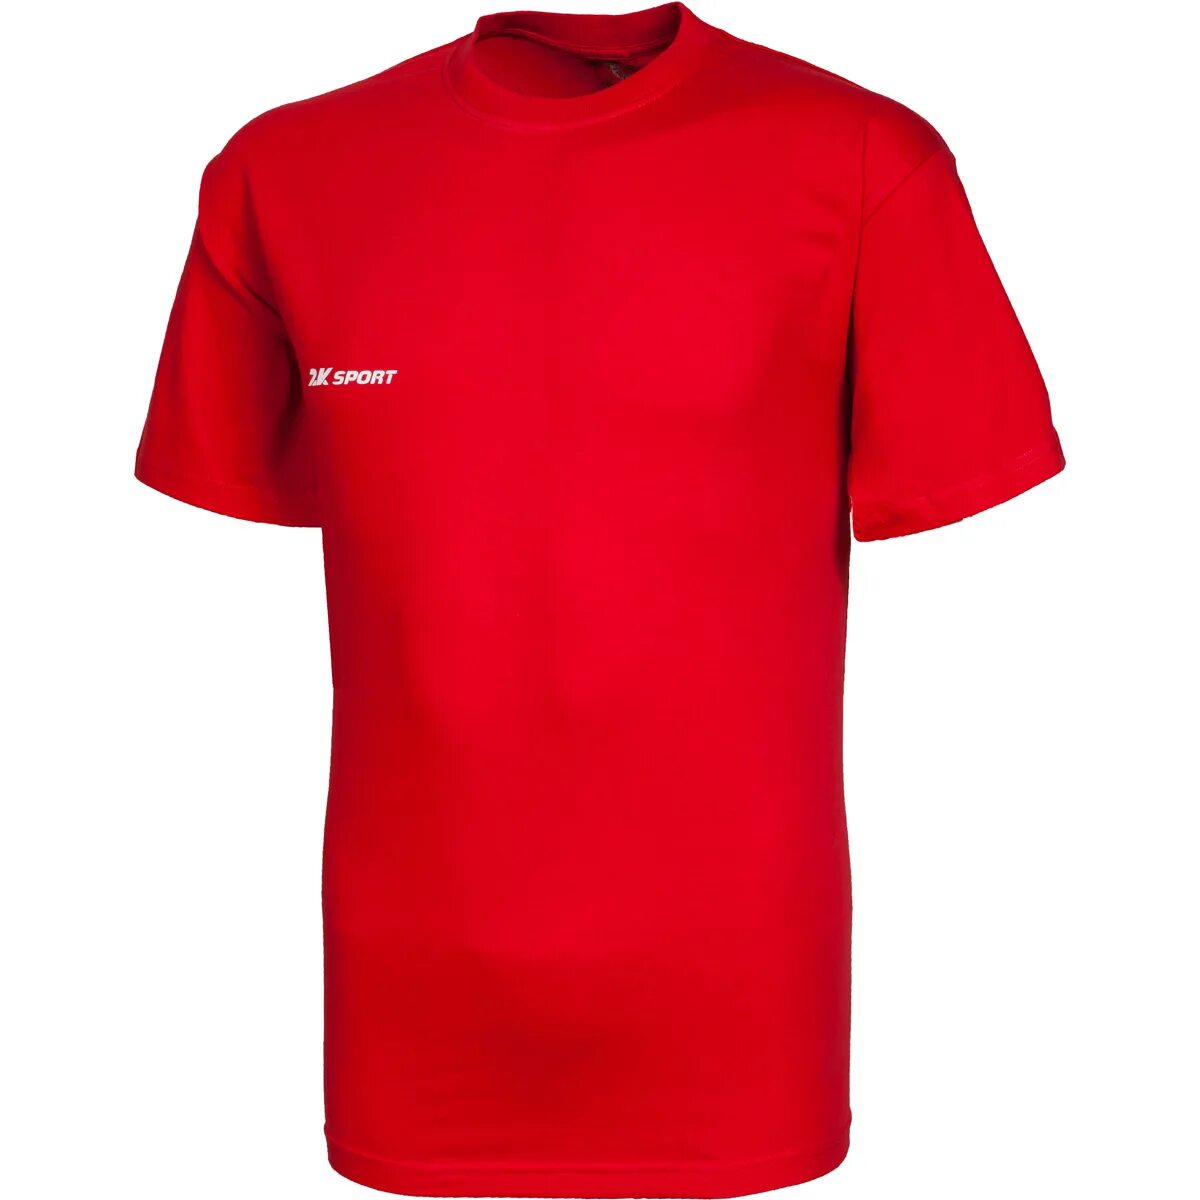 Красная майка купить. Красная футболка мужская. Футболка спортивная. Спортивные футболки мужские. Красная спортивная футболка.